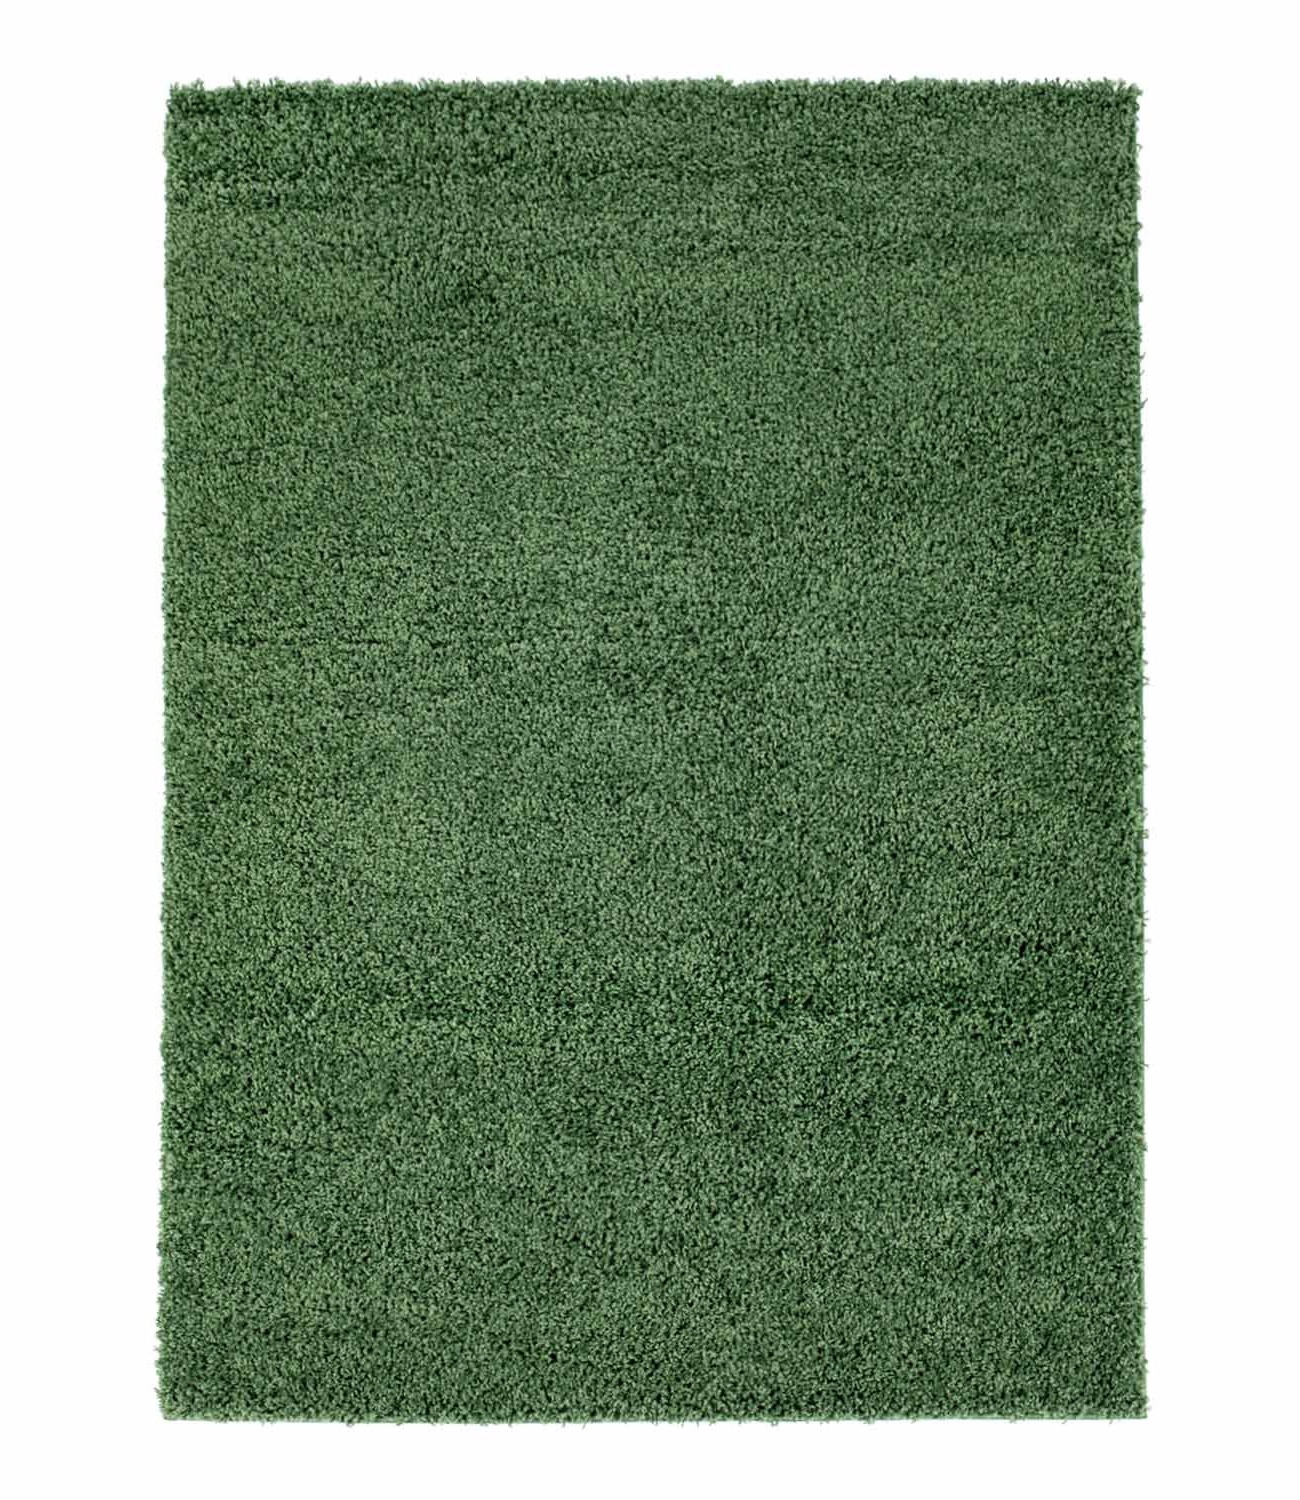 Trim shaggy rug green round short pile long 60x120-cm 80x 150 cm 140x200 cm 160x230 cm 200x300 cm